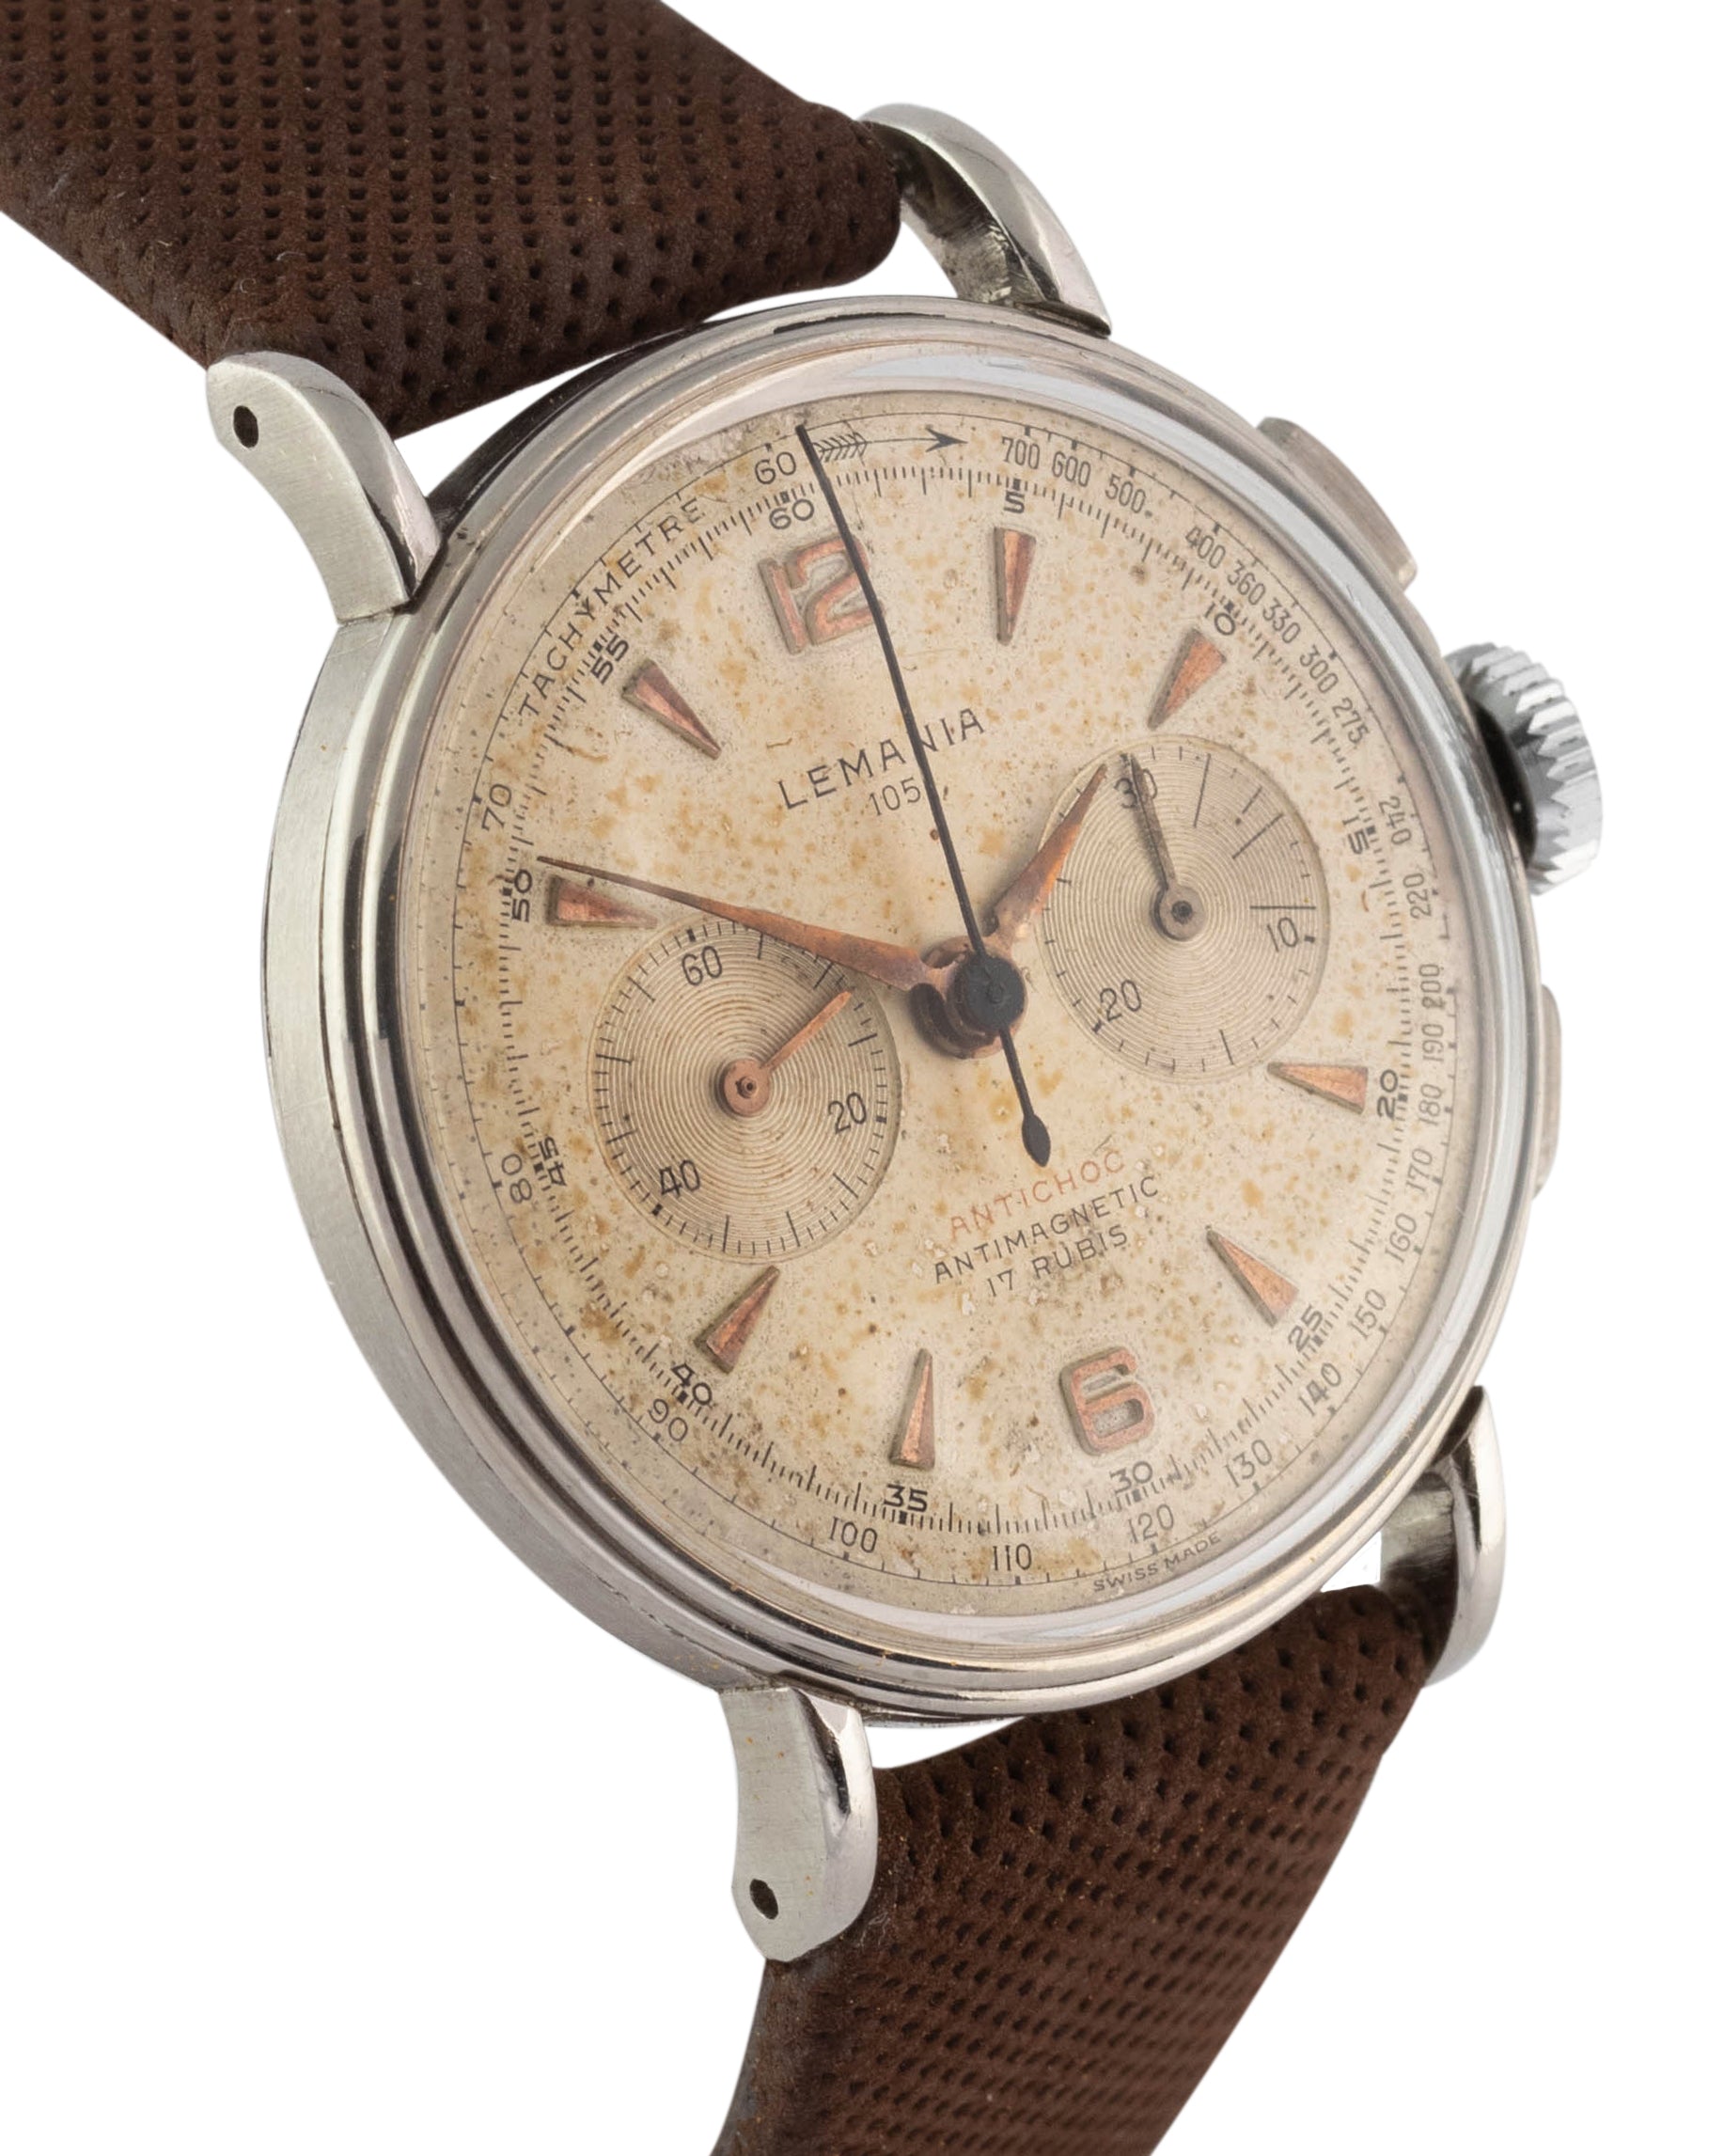 Lemania Chronograph "105 Antichoc" wrist watch 